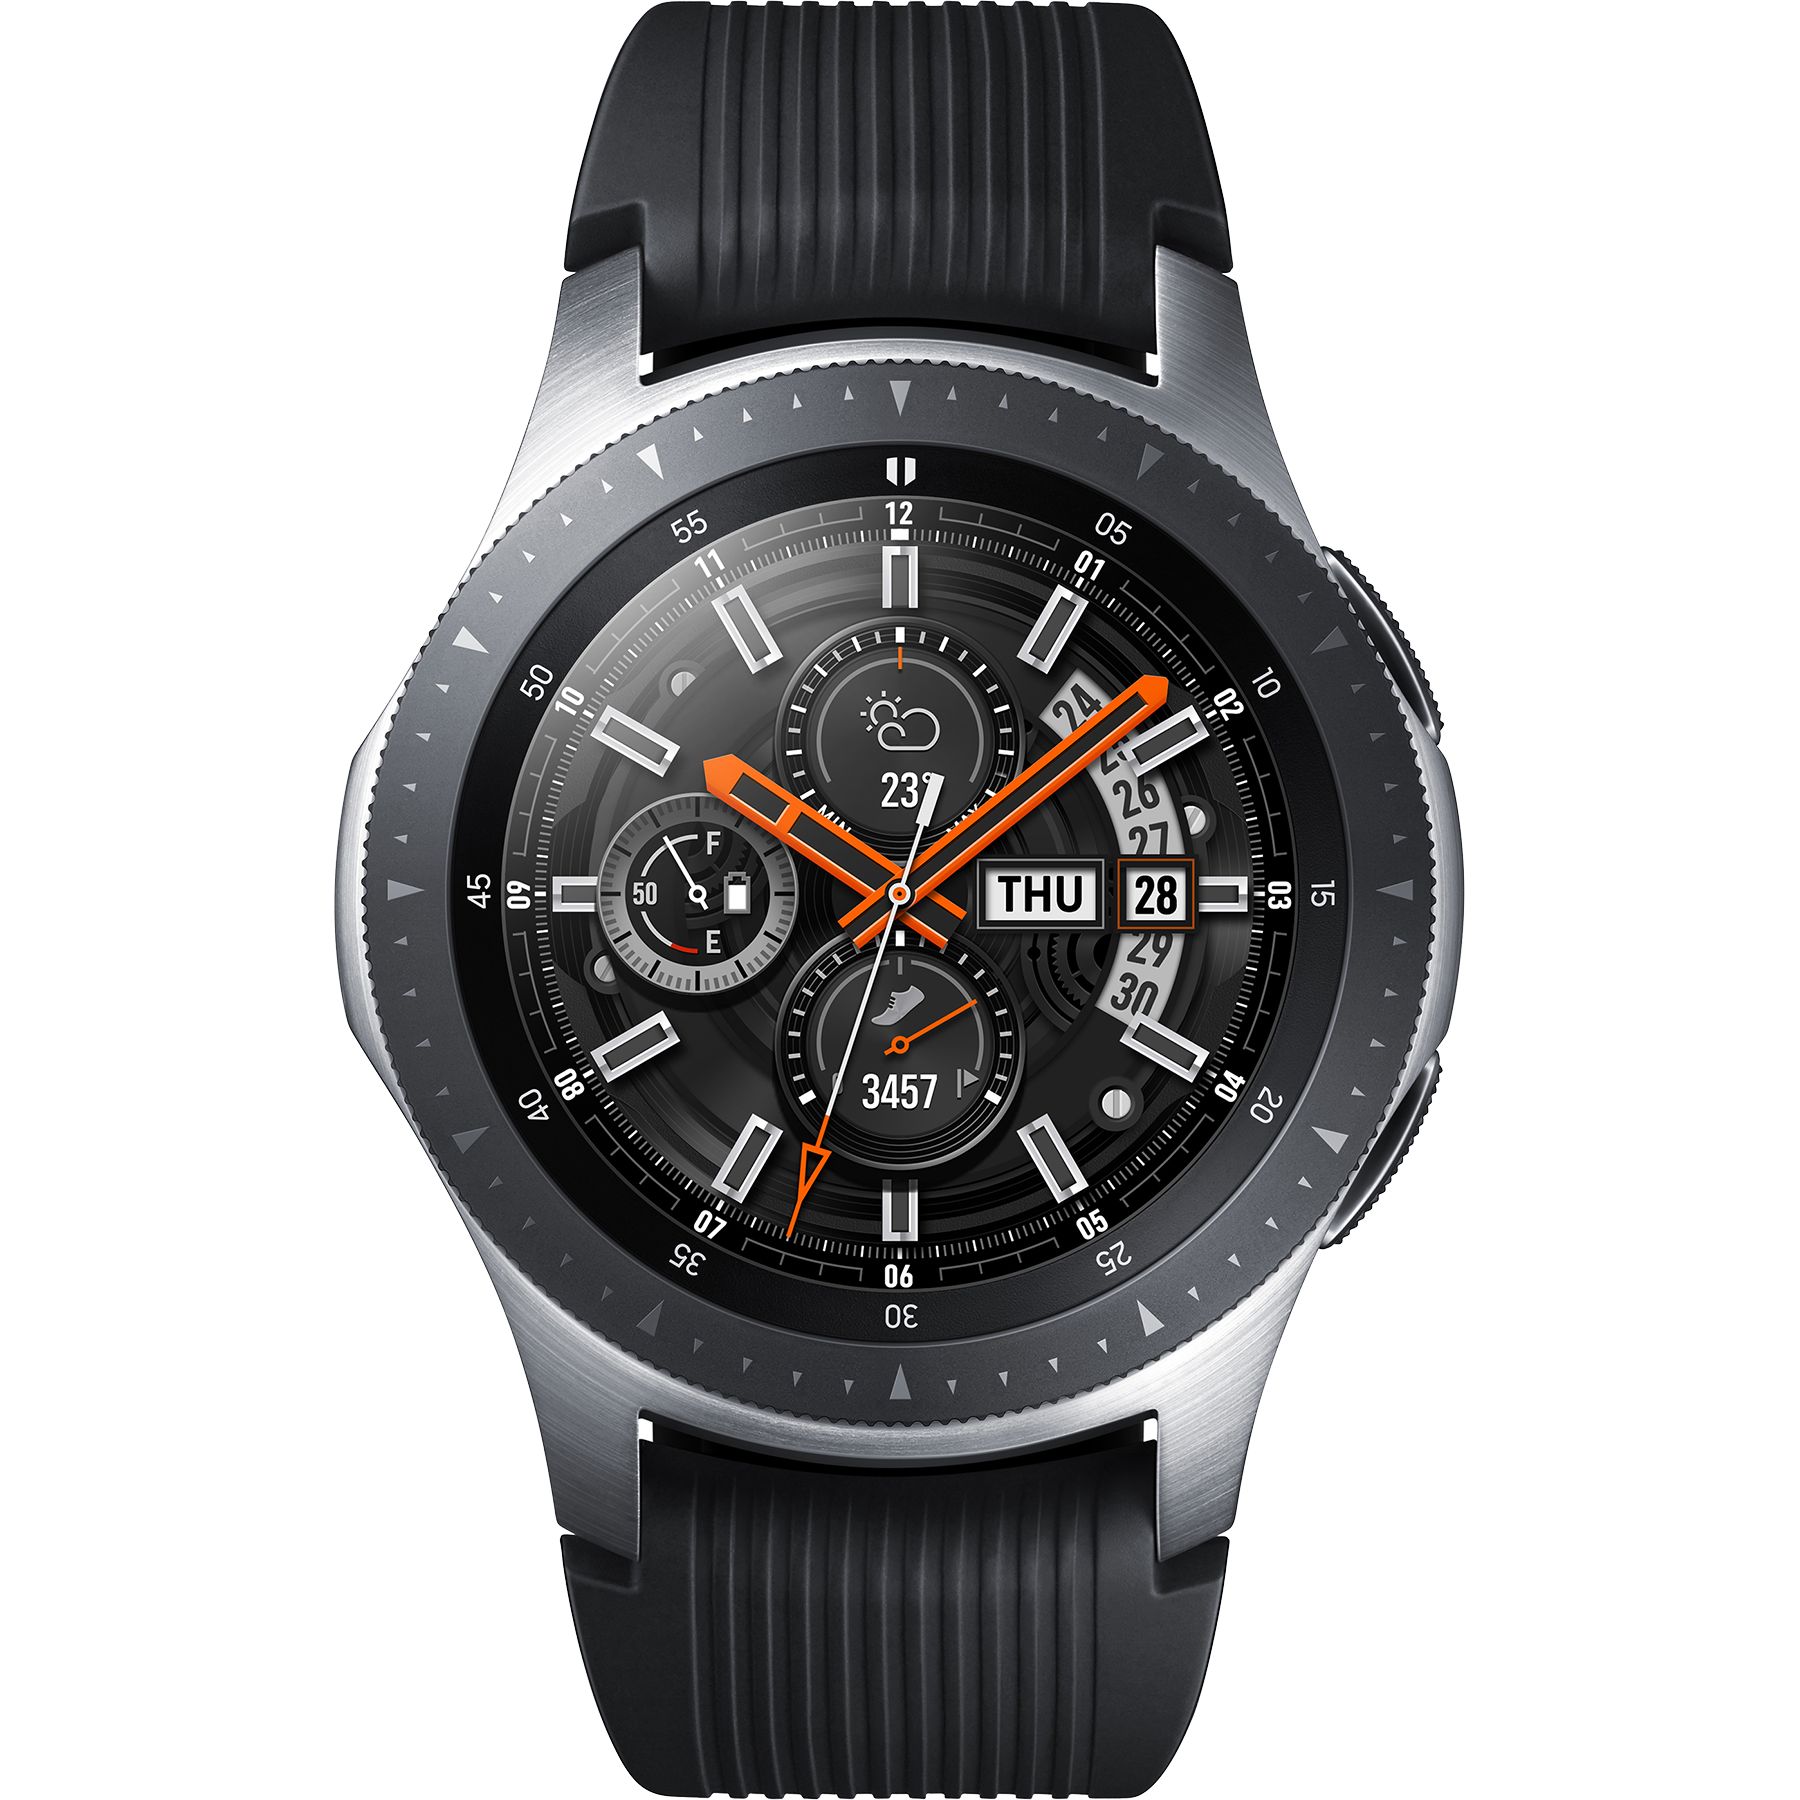 Samsung Galaxy Watch 46mm | Carphone 